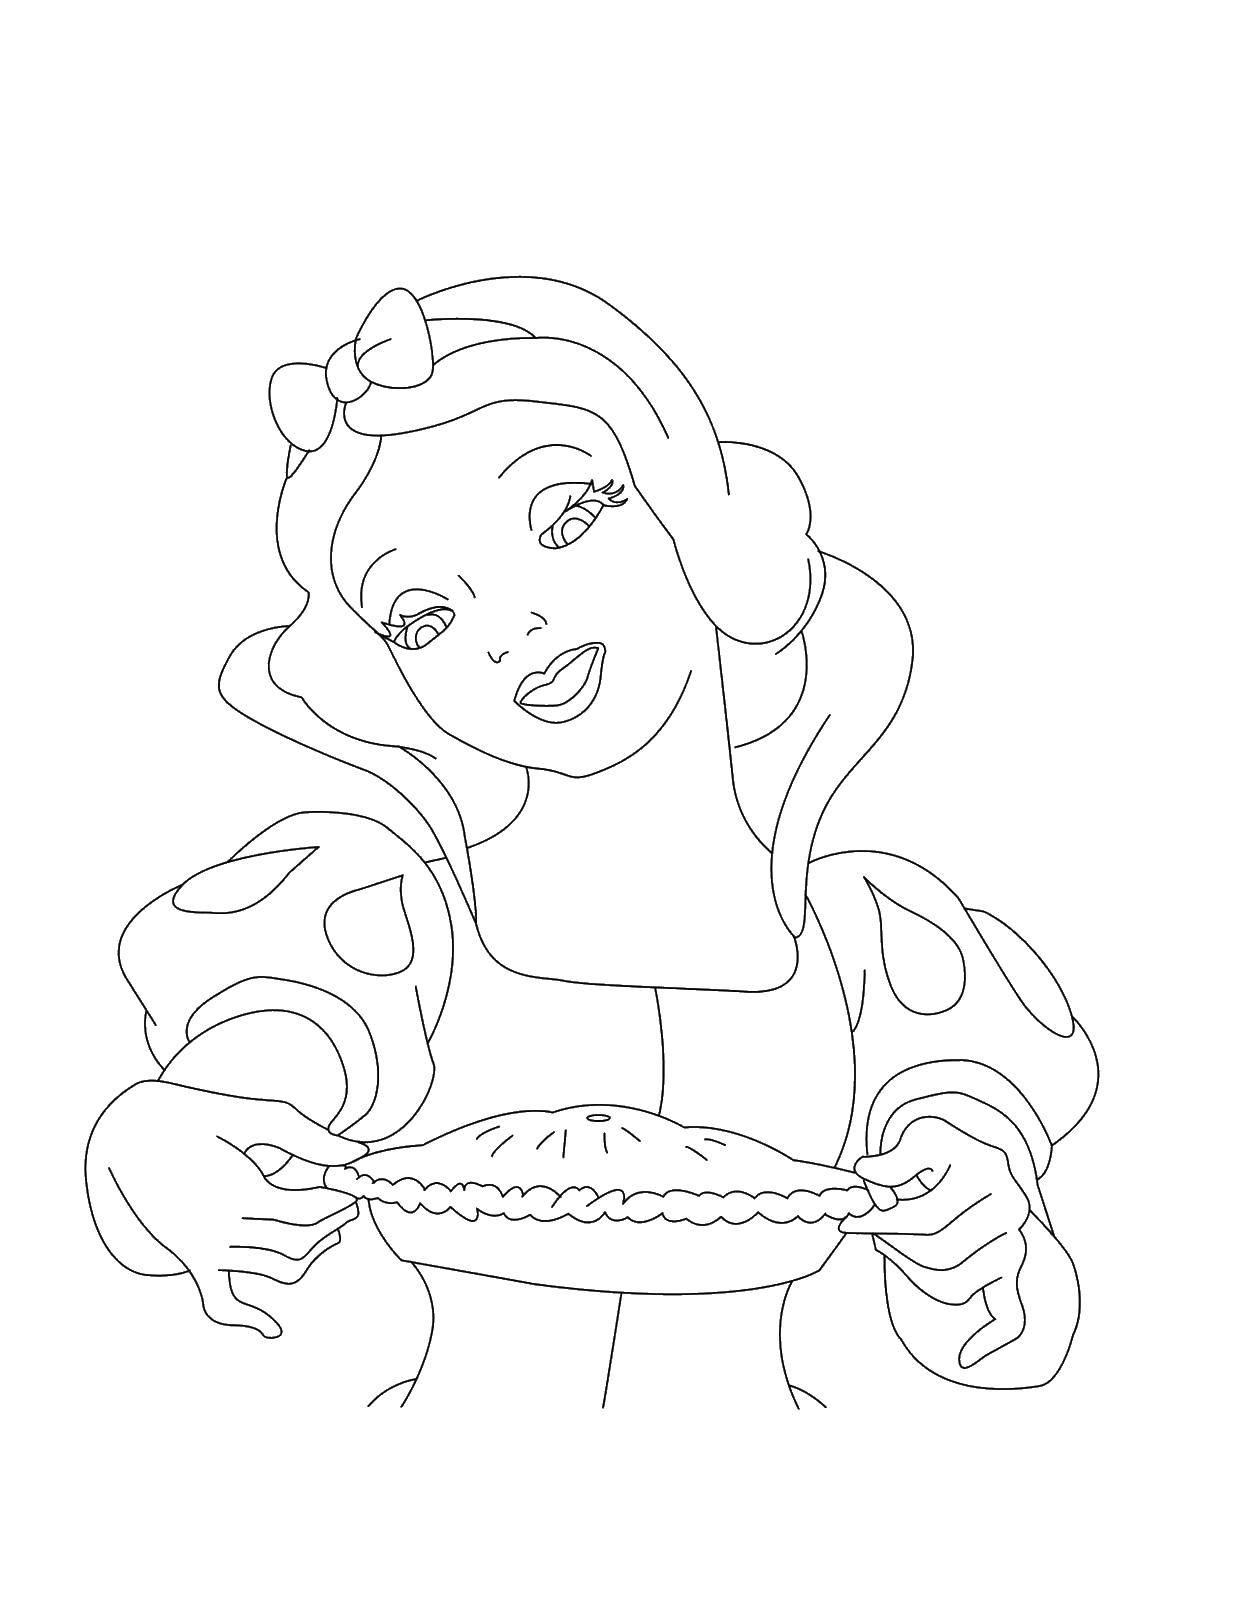 Coloring Disney Princess baked pie. Category Disney cartoons. Tags:  Princess cake.